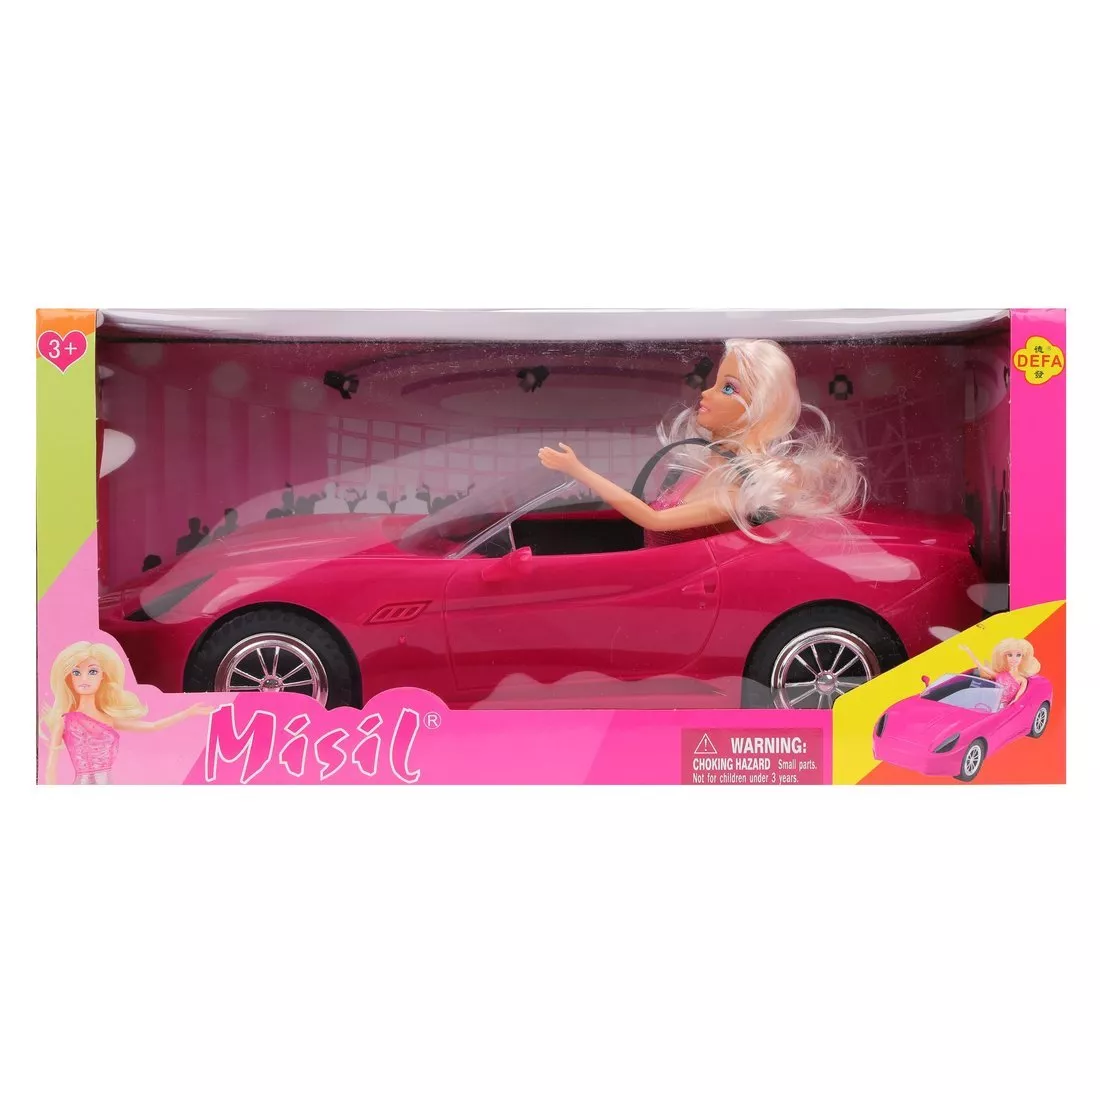 Картинка Кукла Defa в кабриолете, в ассорт. Артикул 8228-160